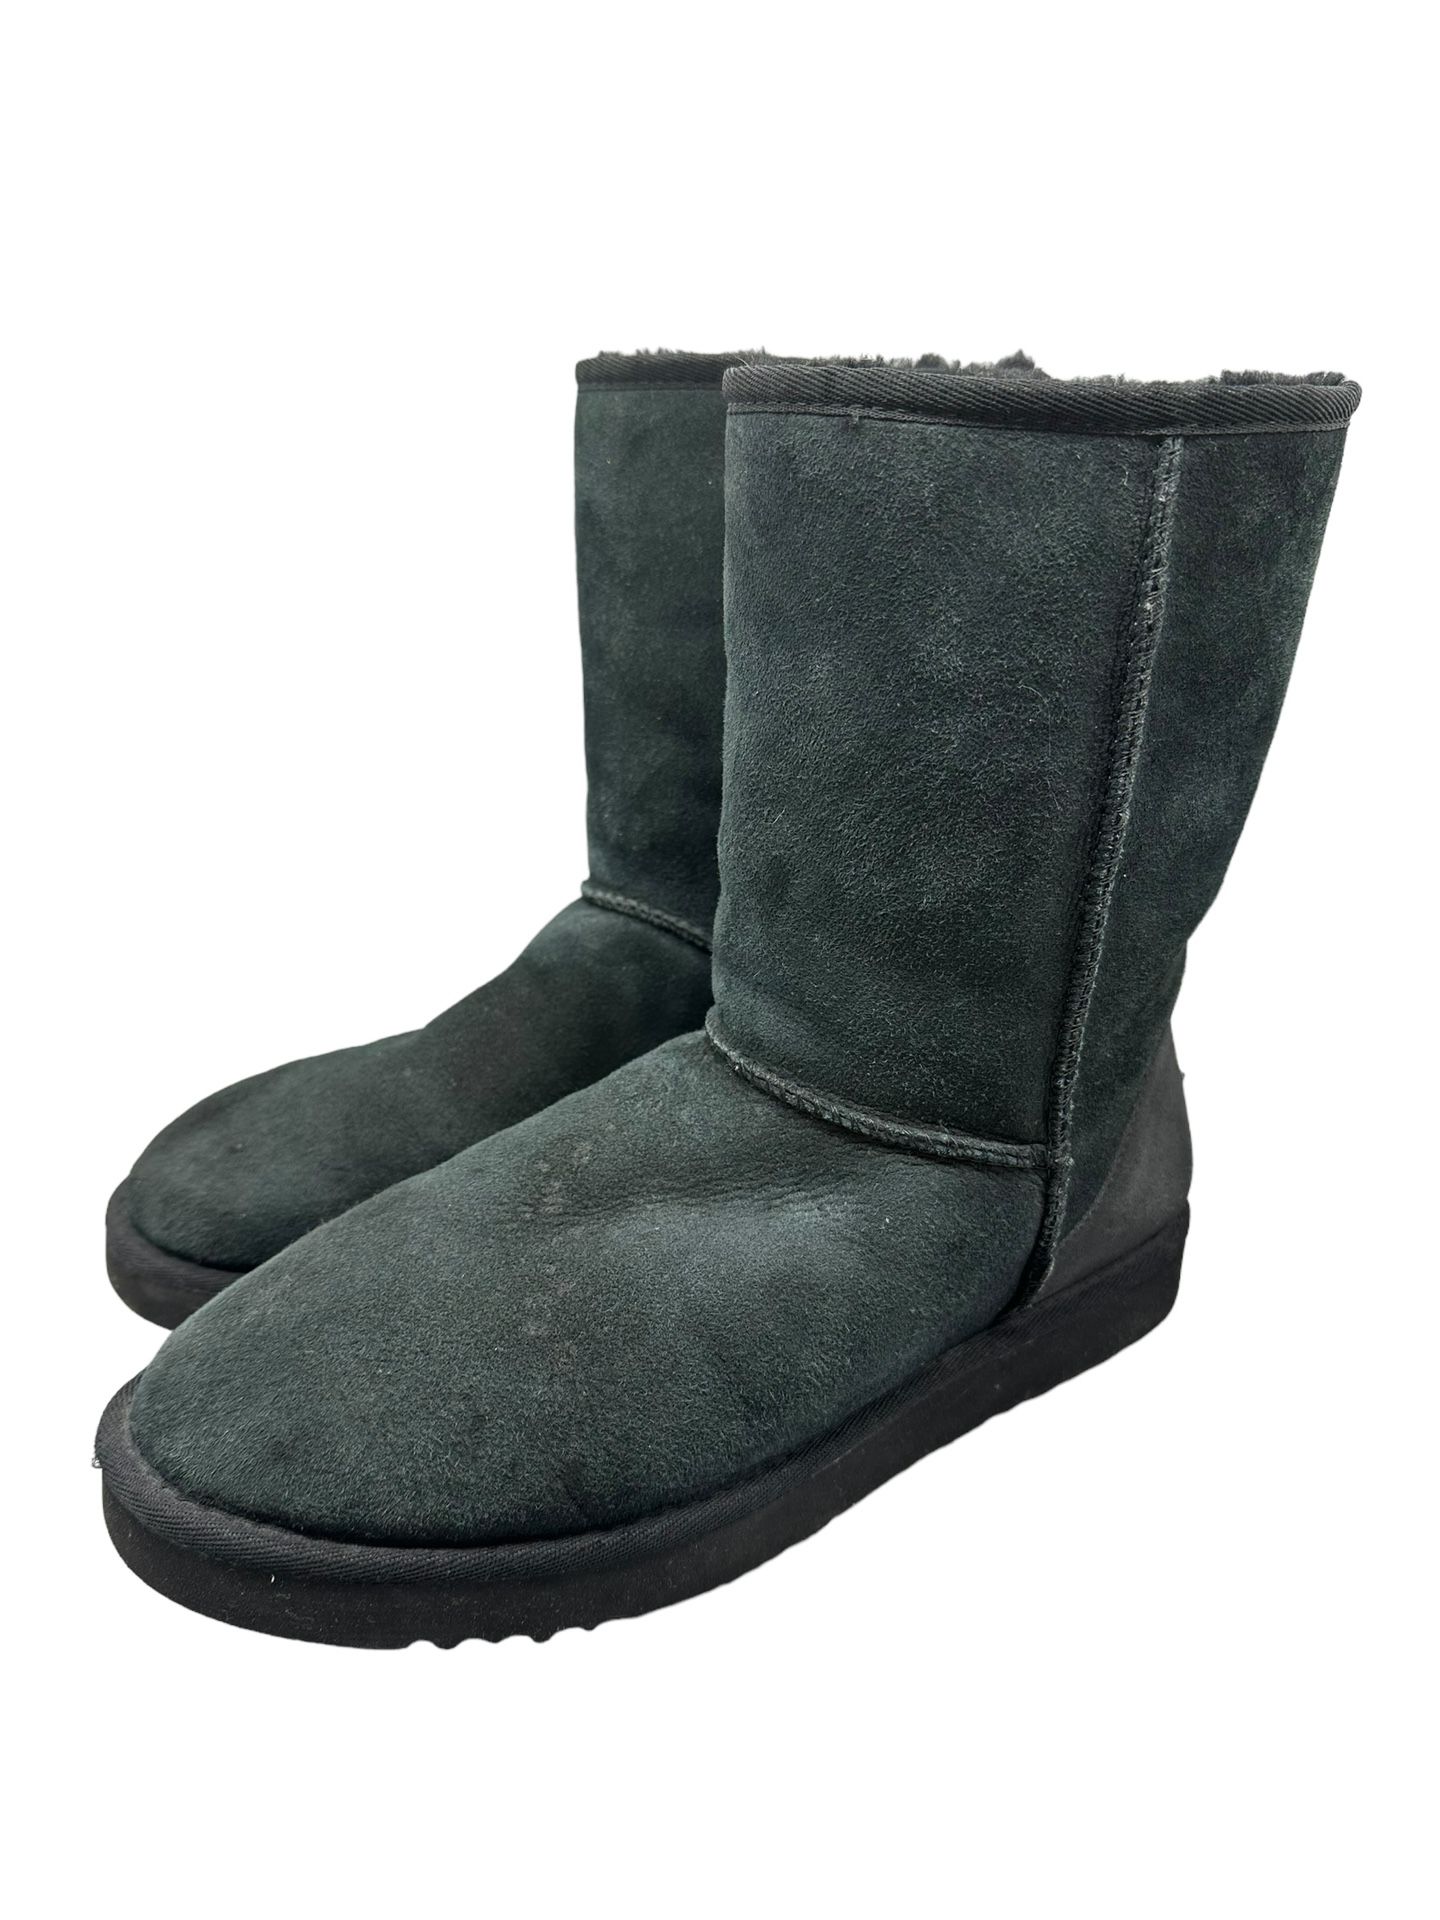 Ugg Classic Short 5800 Boots Men’s 10M Black Suede Sheepskin Lined Winter Snow